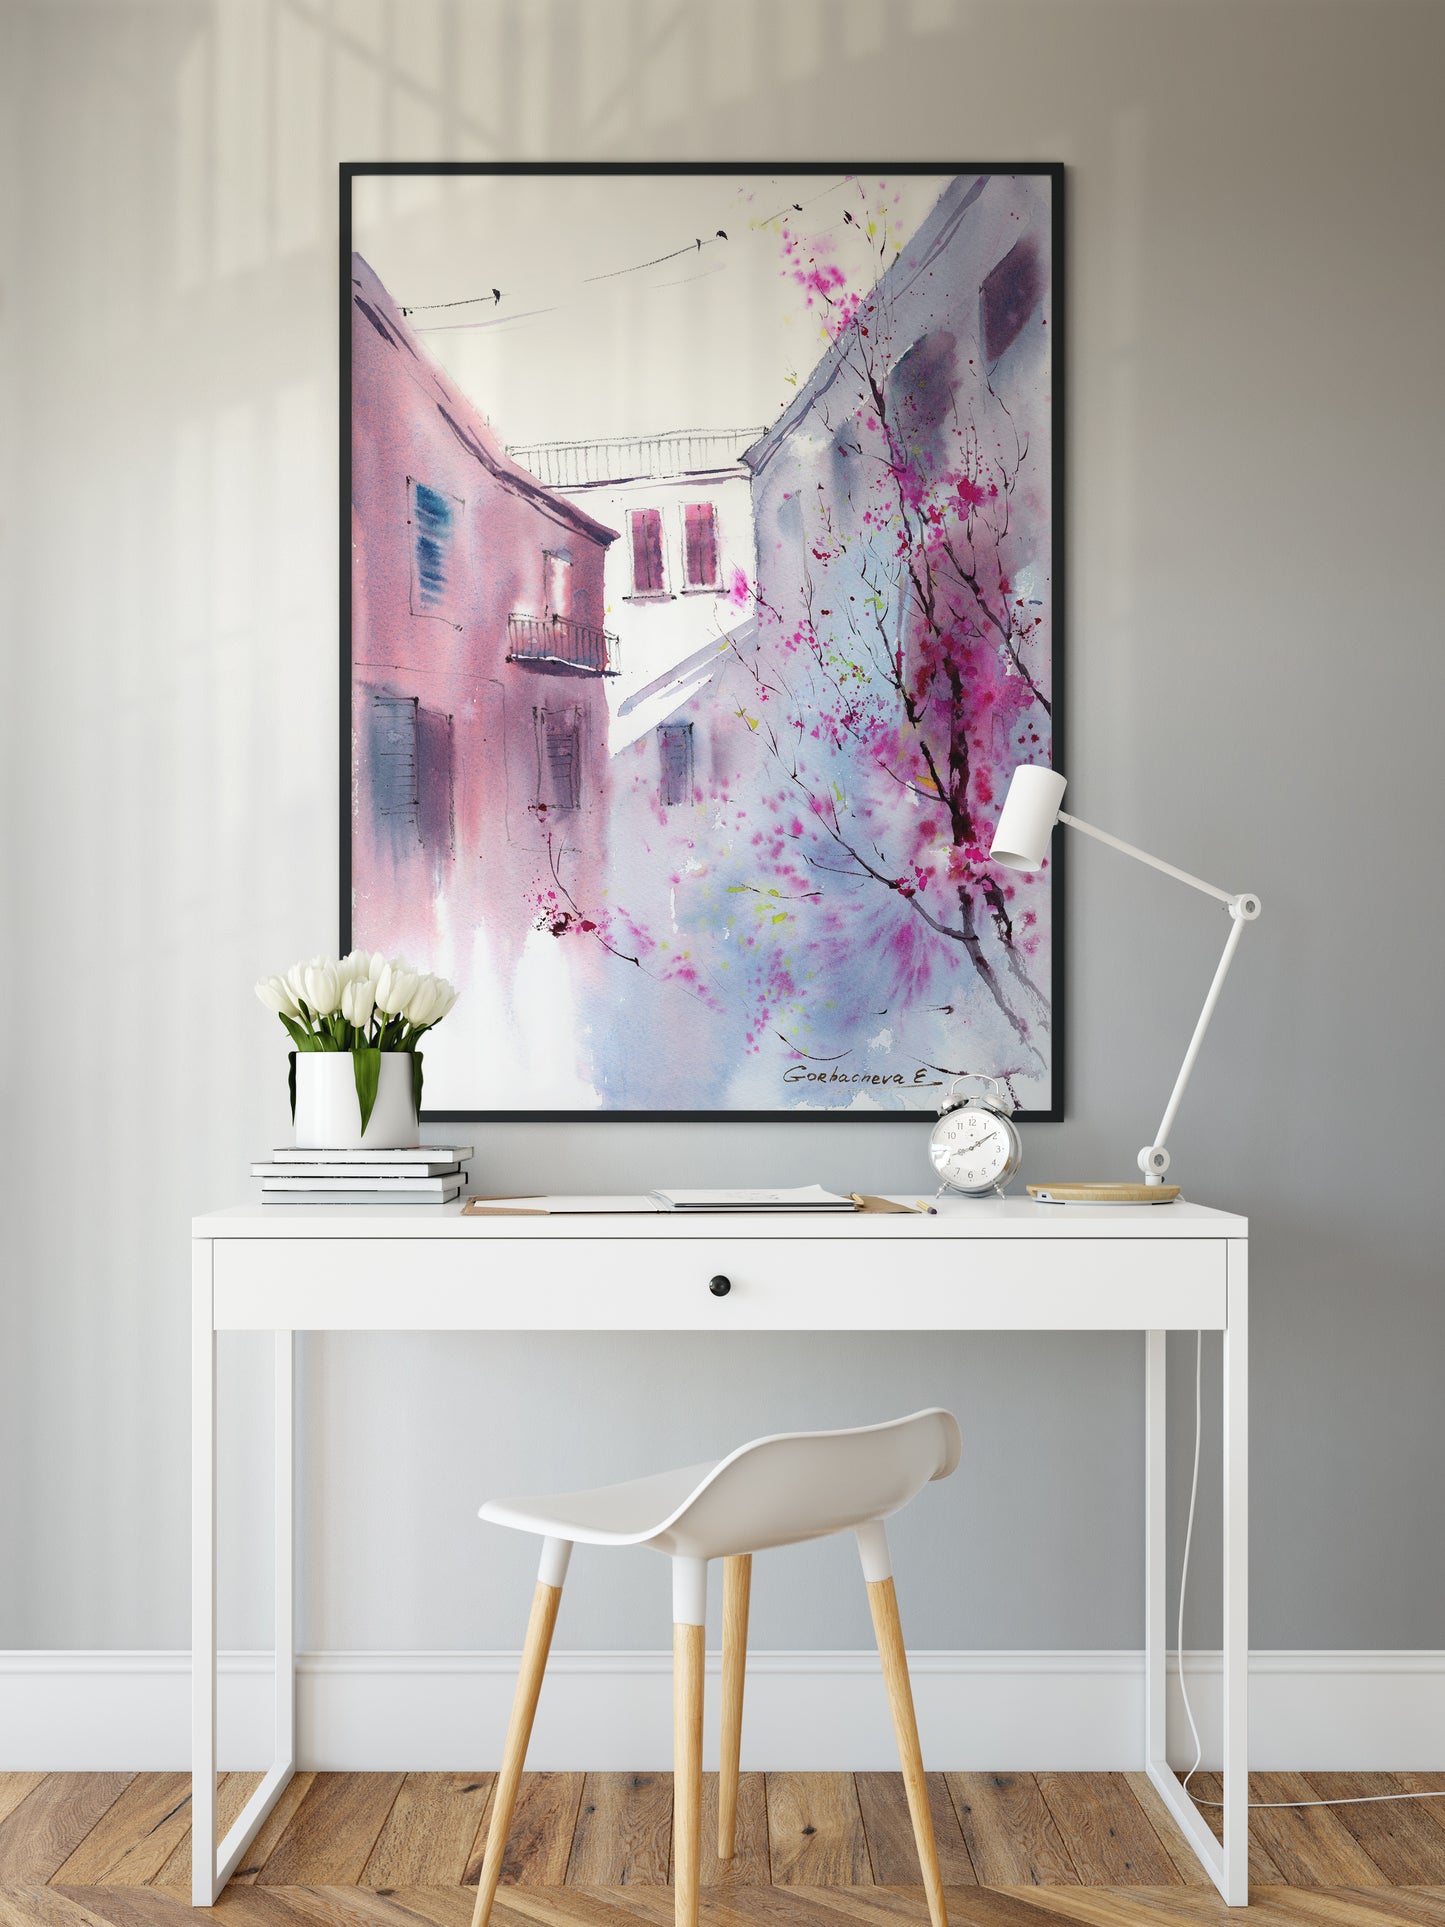 Mediterranean Art, Tranquil Italian Courtyard Scene, Neutral Pink Wall Print, Perfect Wedding Gift